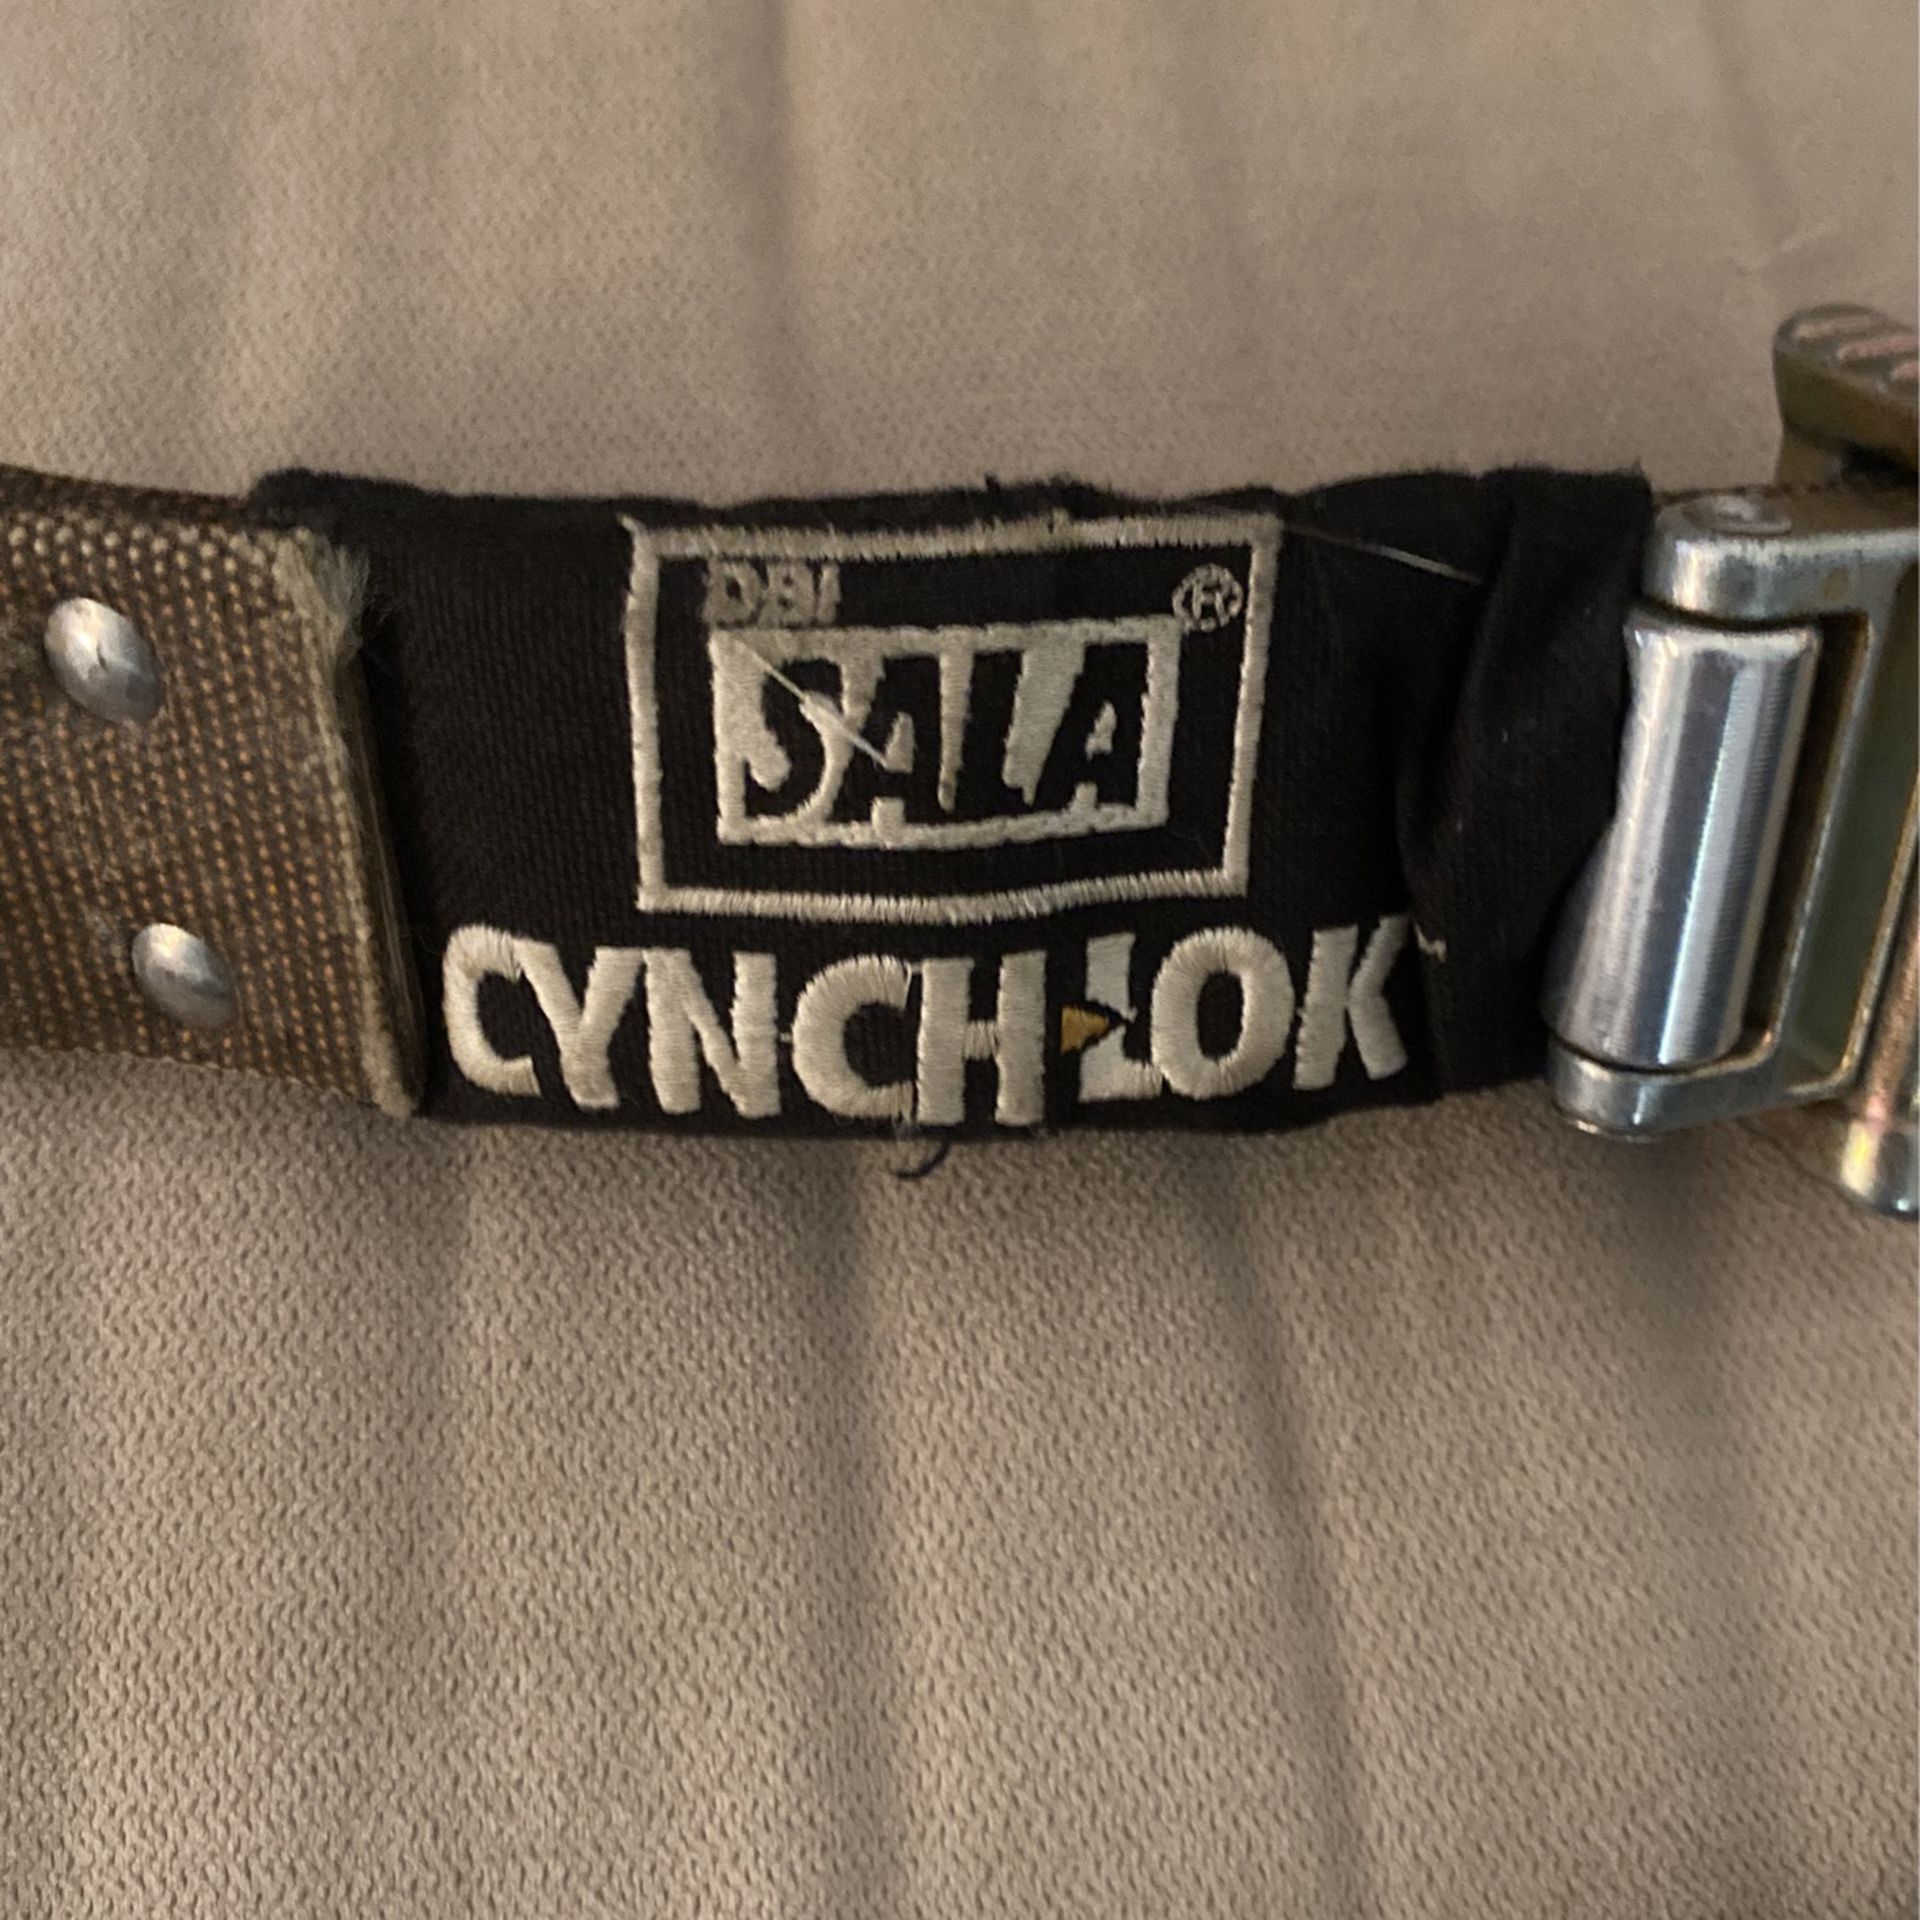 SALA Cynch-Lok Climbing Strap/rope